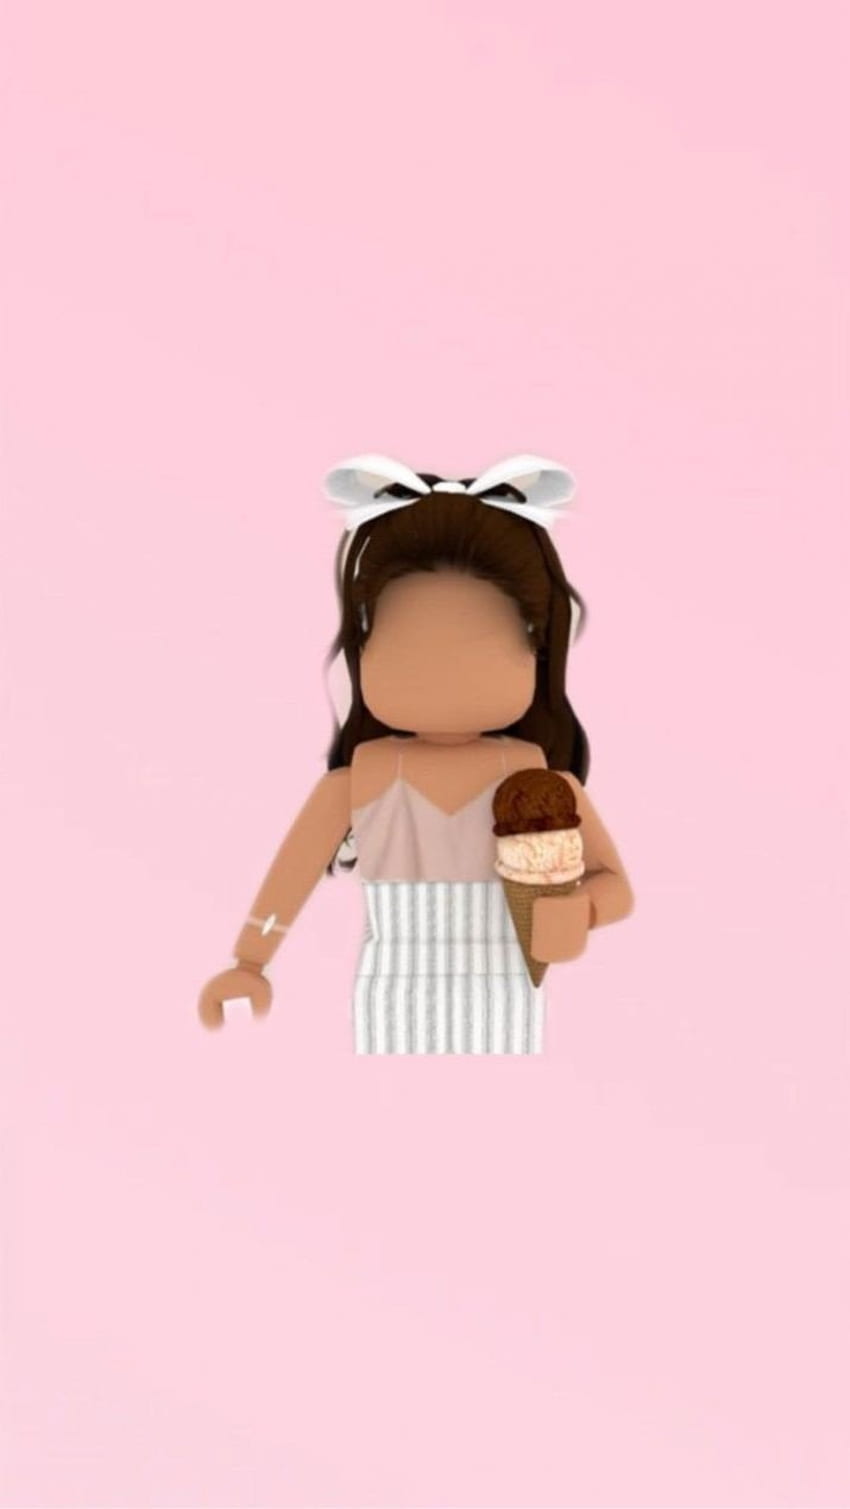 Download Cute Roblox Girl Tanned Skin Wallpaper